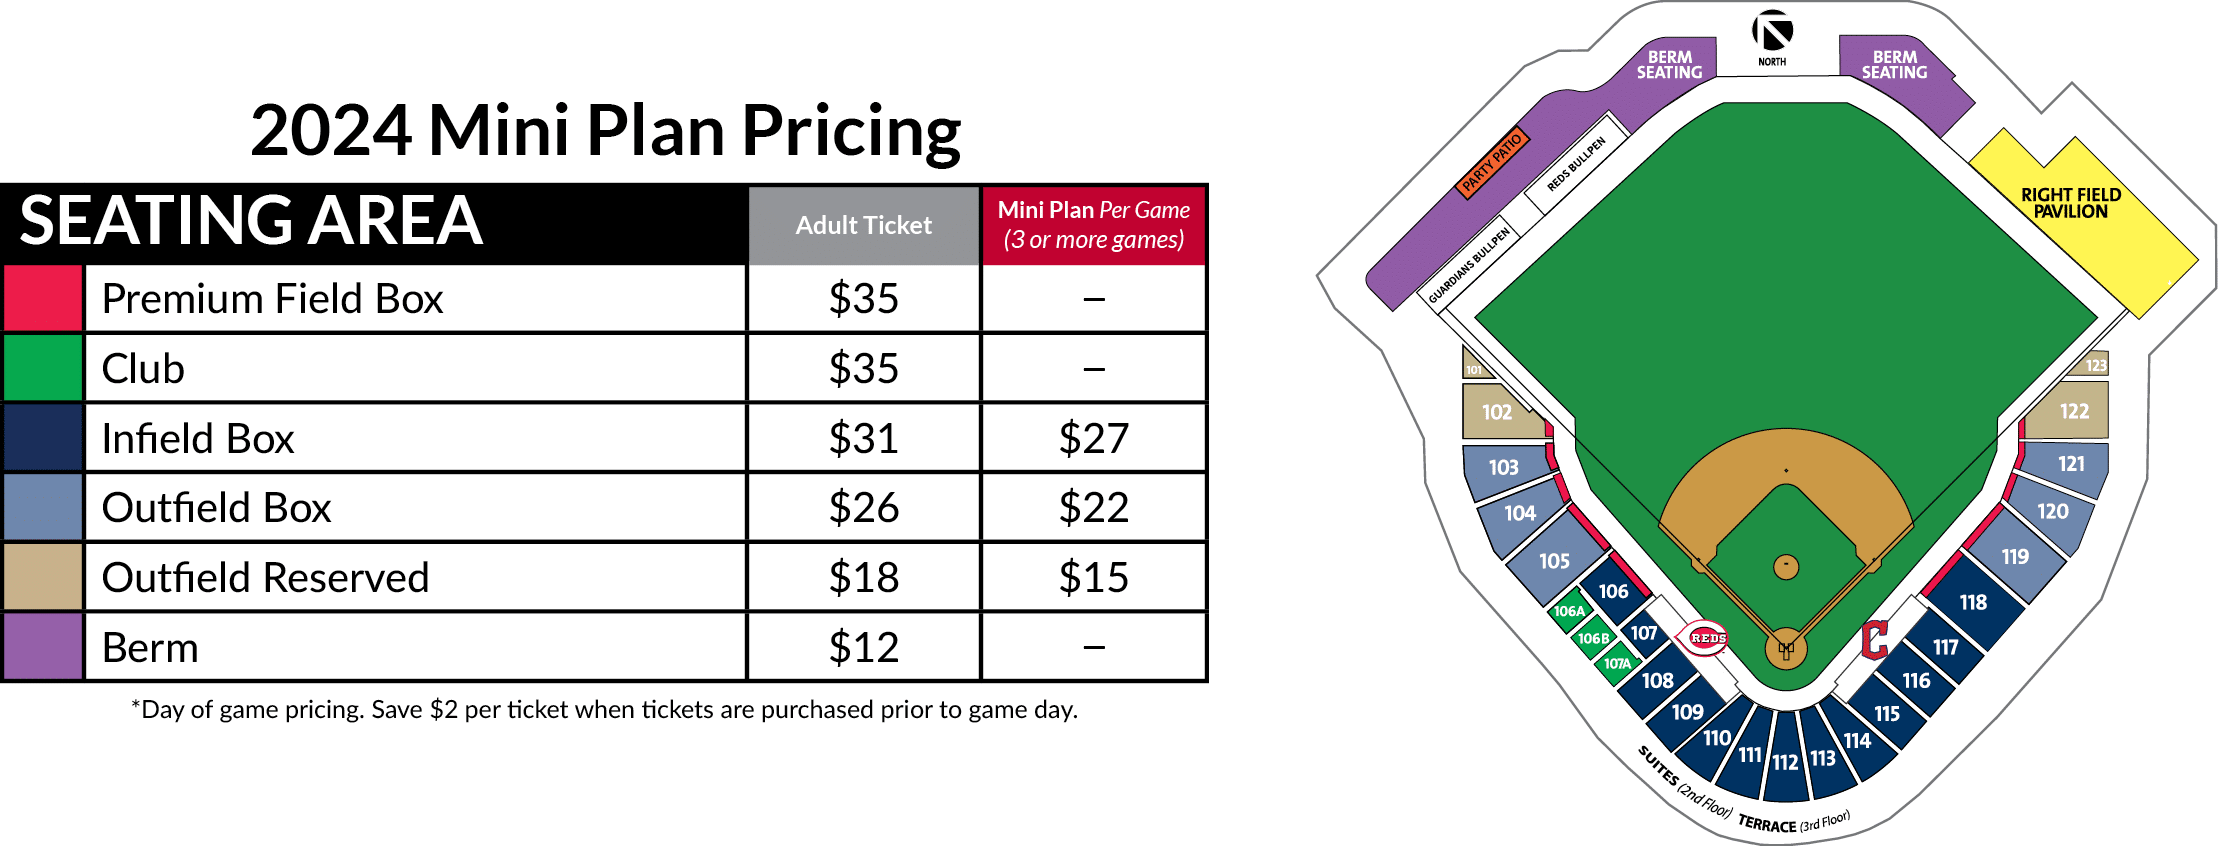 2024 spring training mini plan pricing - Goodyear Ballpark